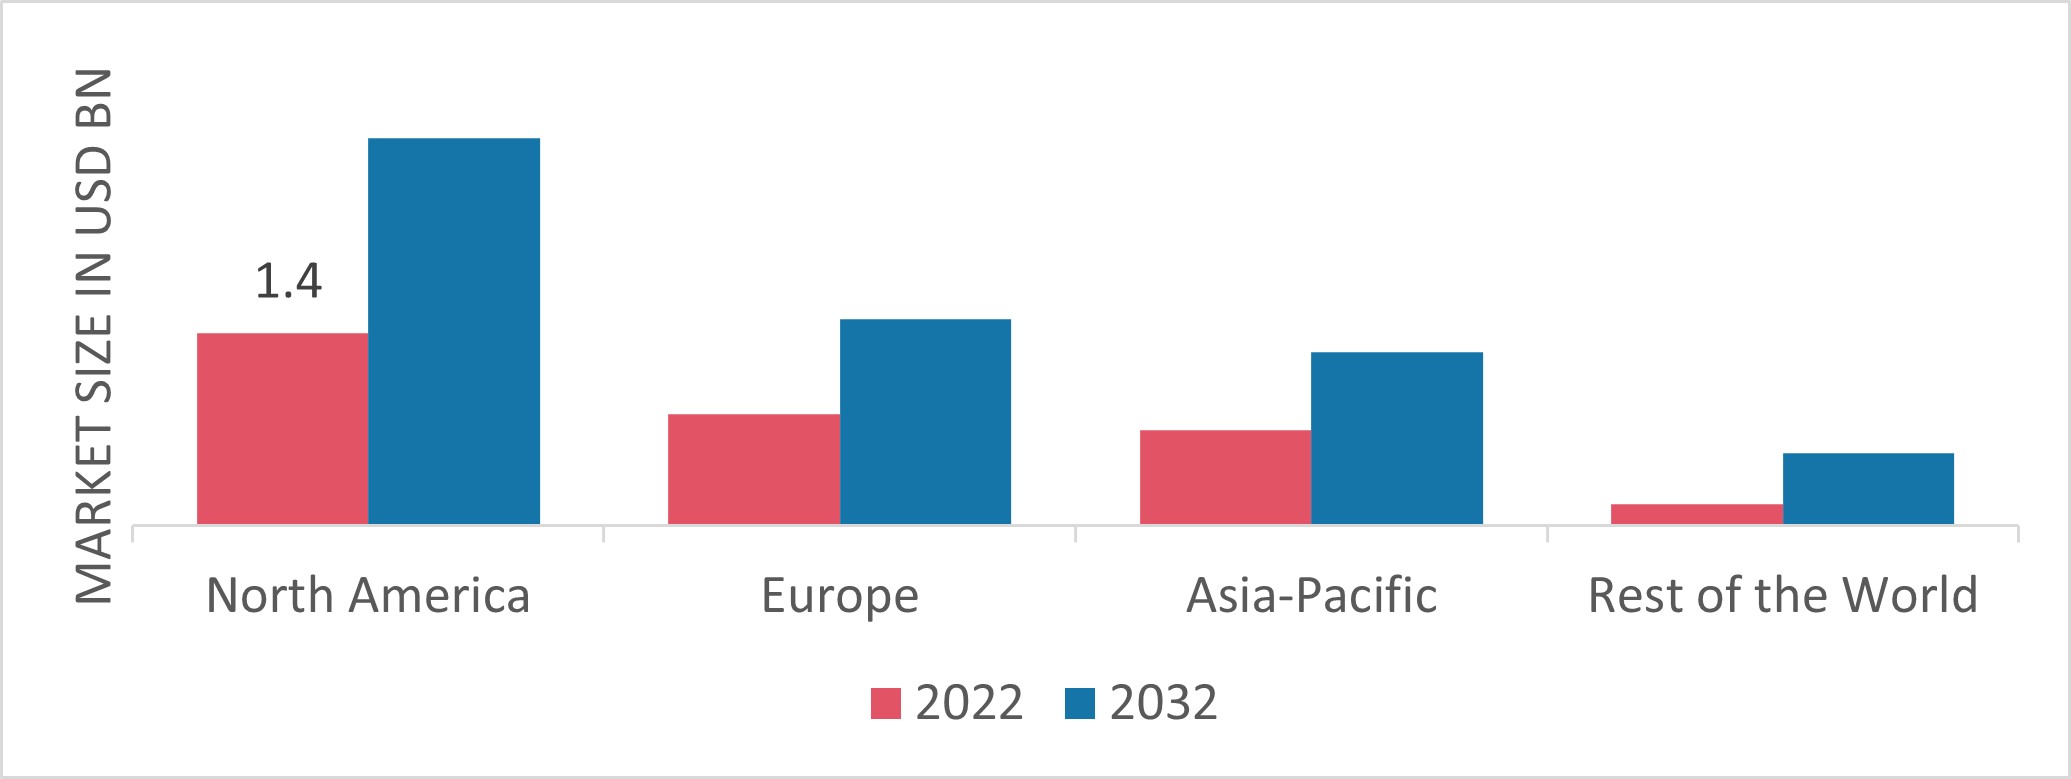 Industrial Floor Scrubber Market Share By Region 2022